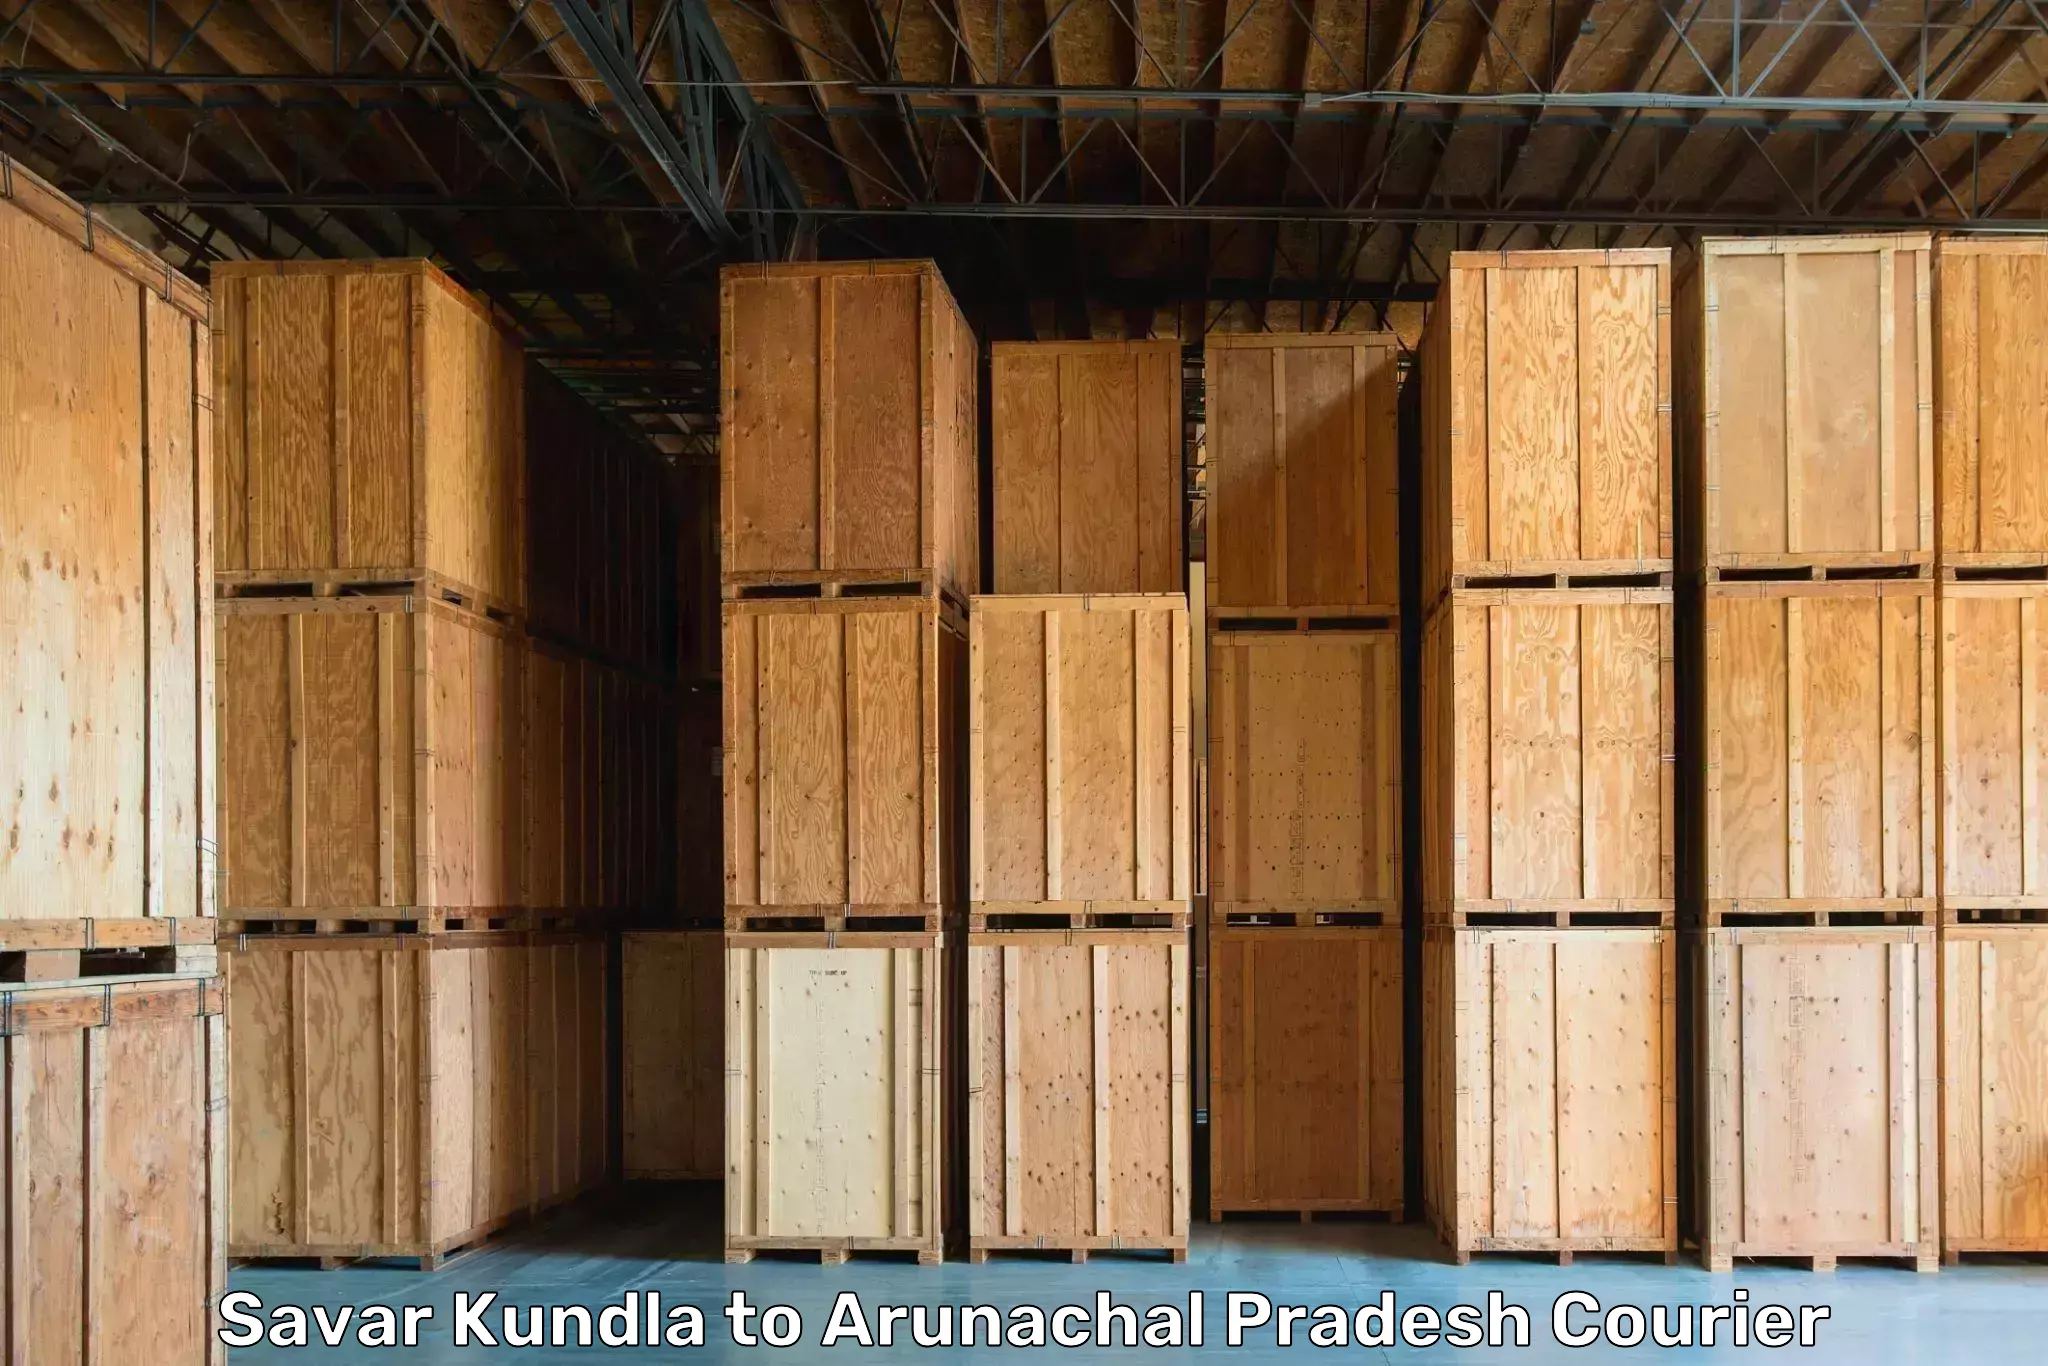 Furniture relocation experts Savar Kundla to Lohit